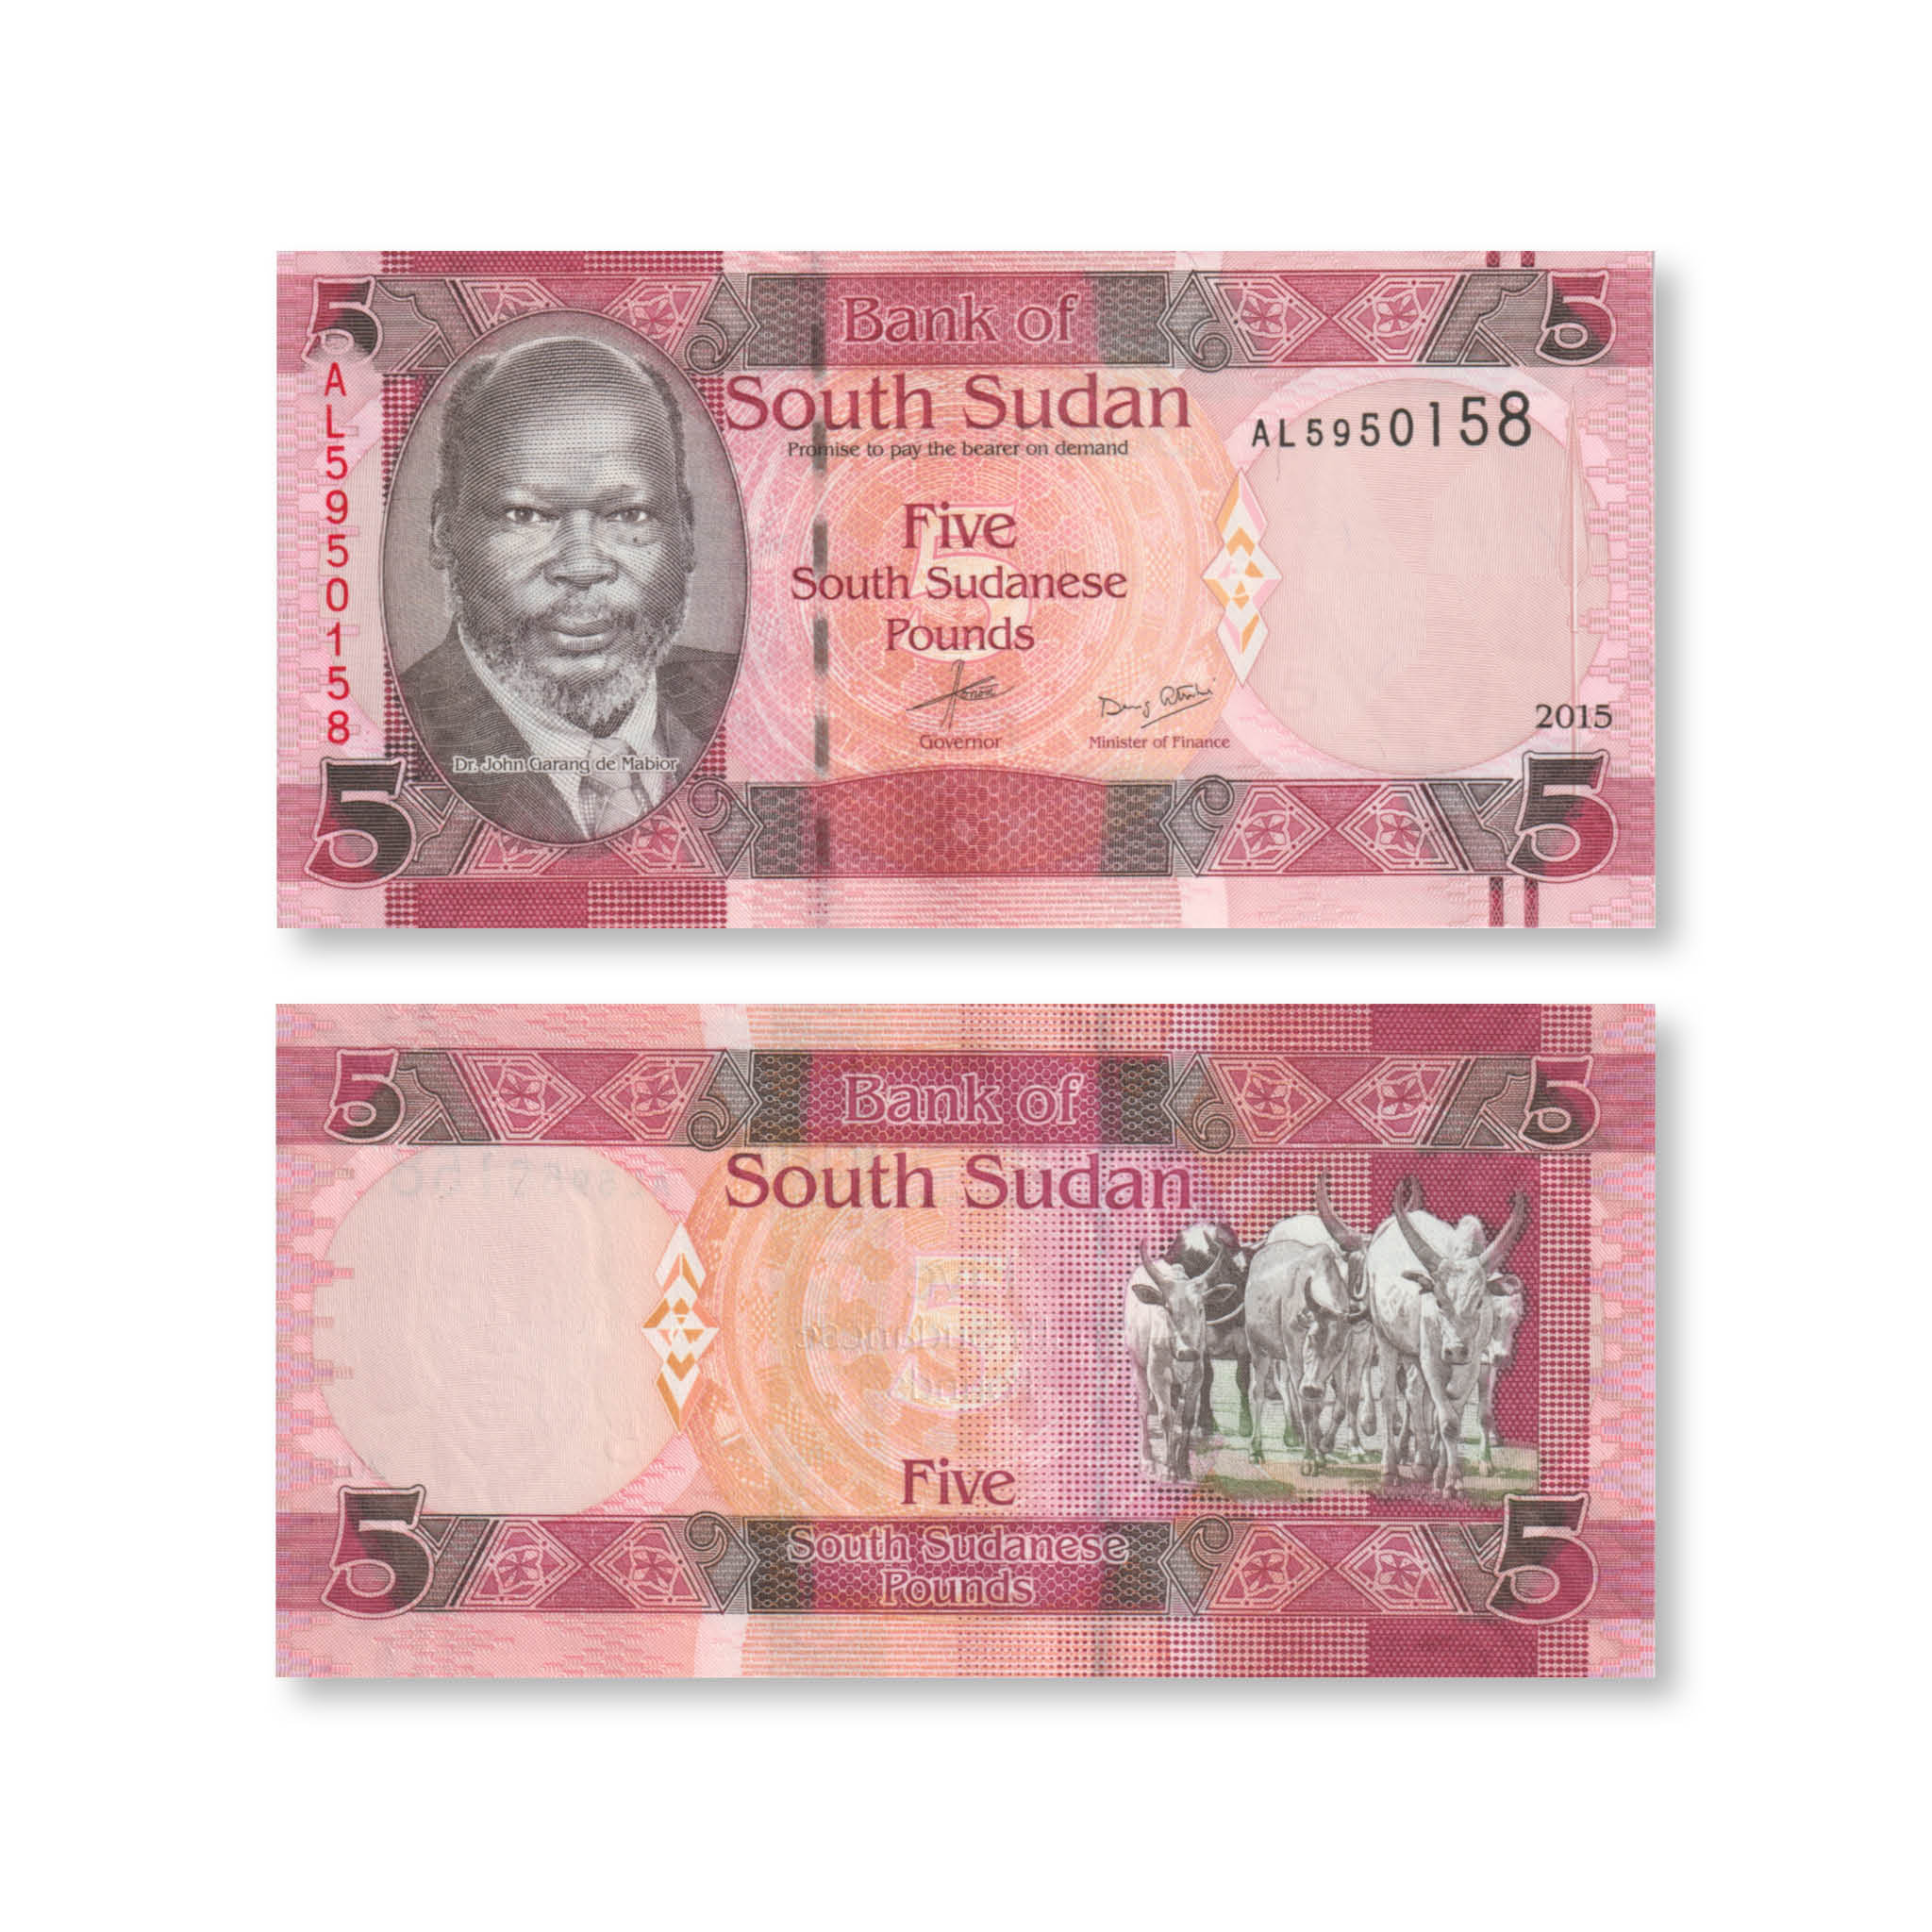 South Sudan 5 Pounds, 2015, B111a, P11a, UNC